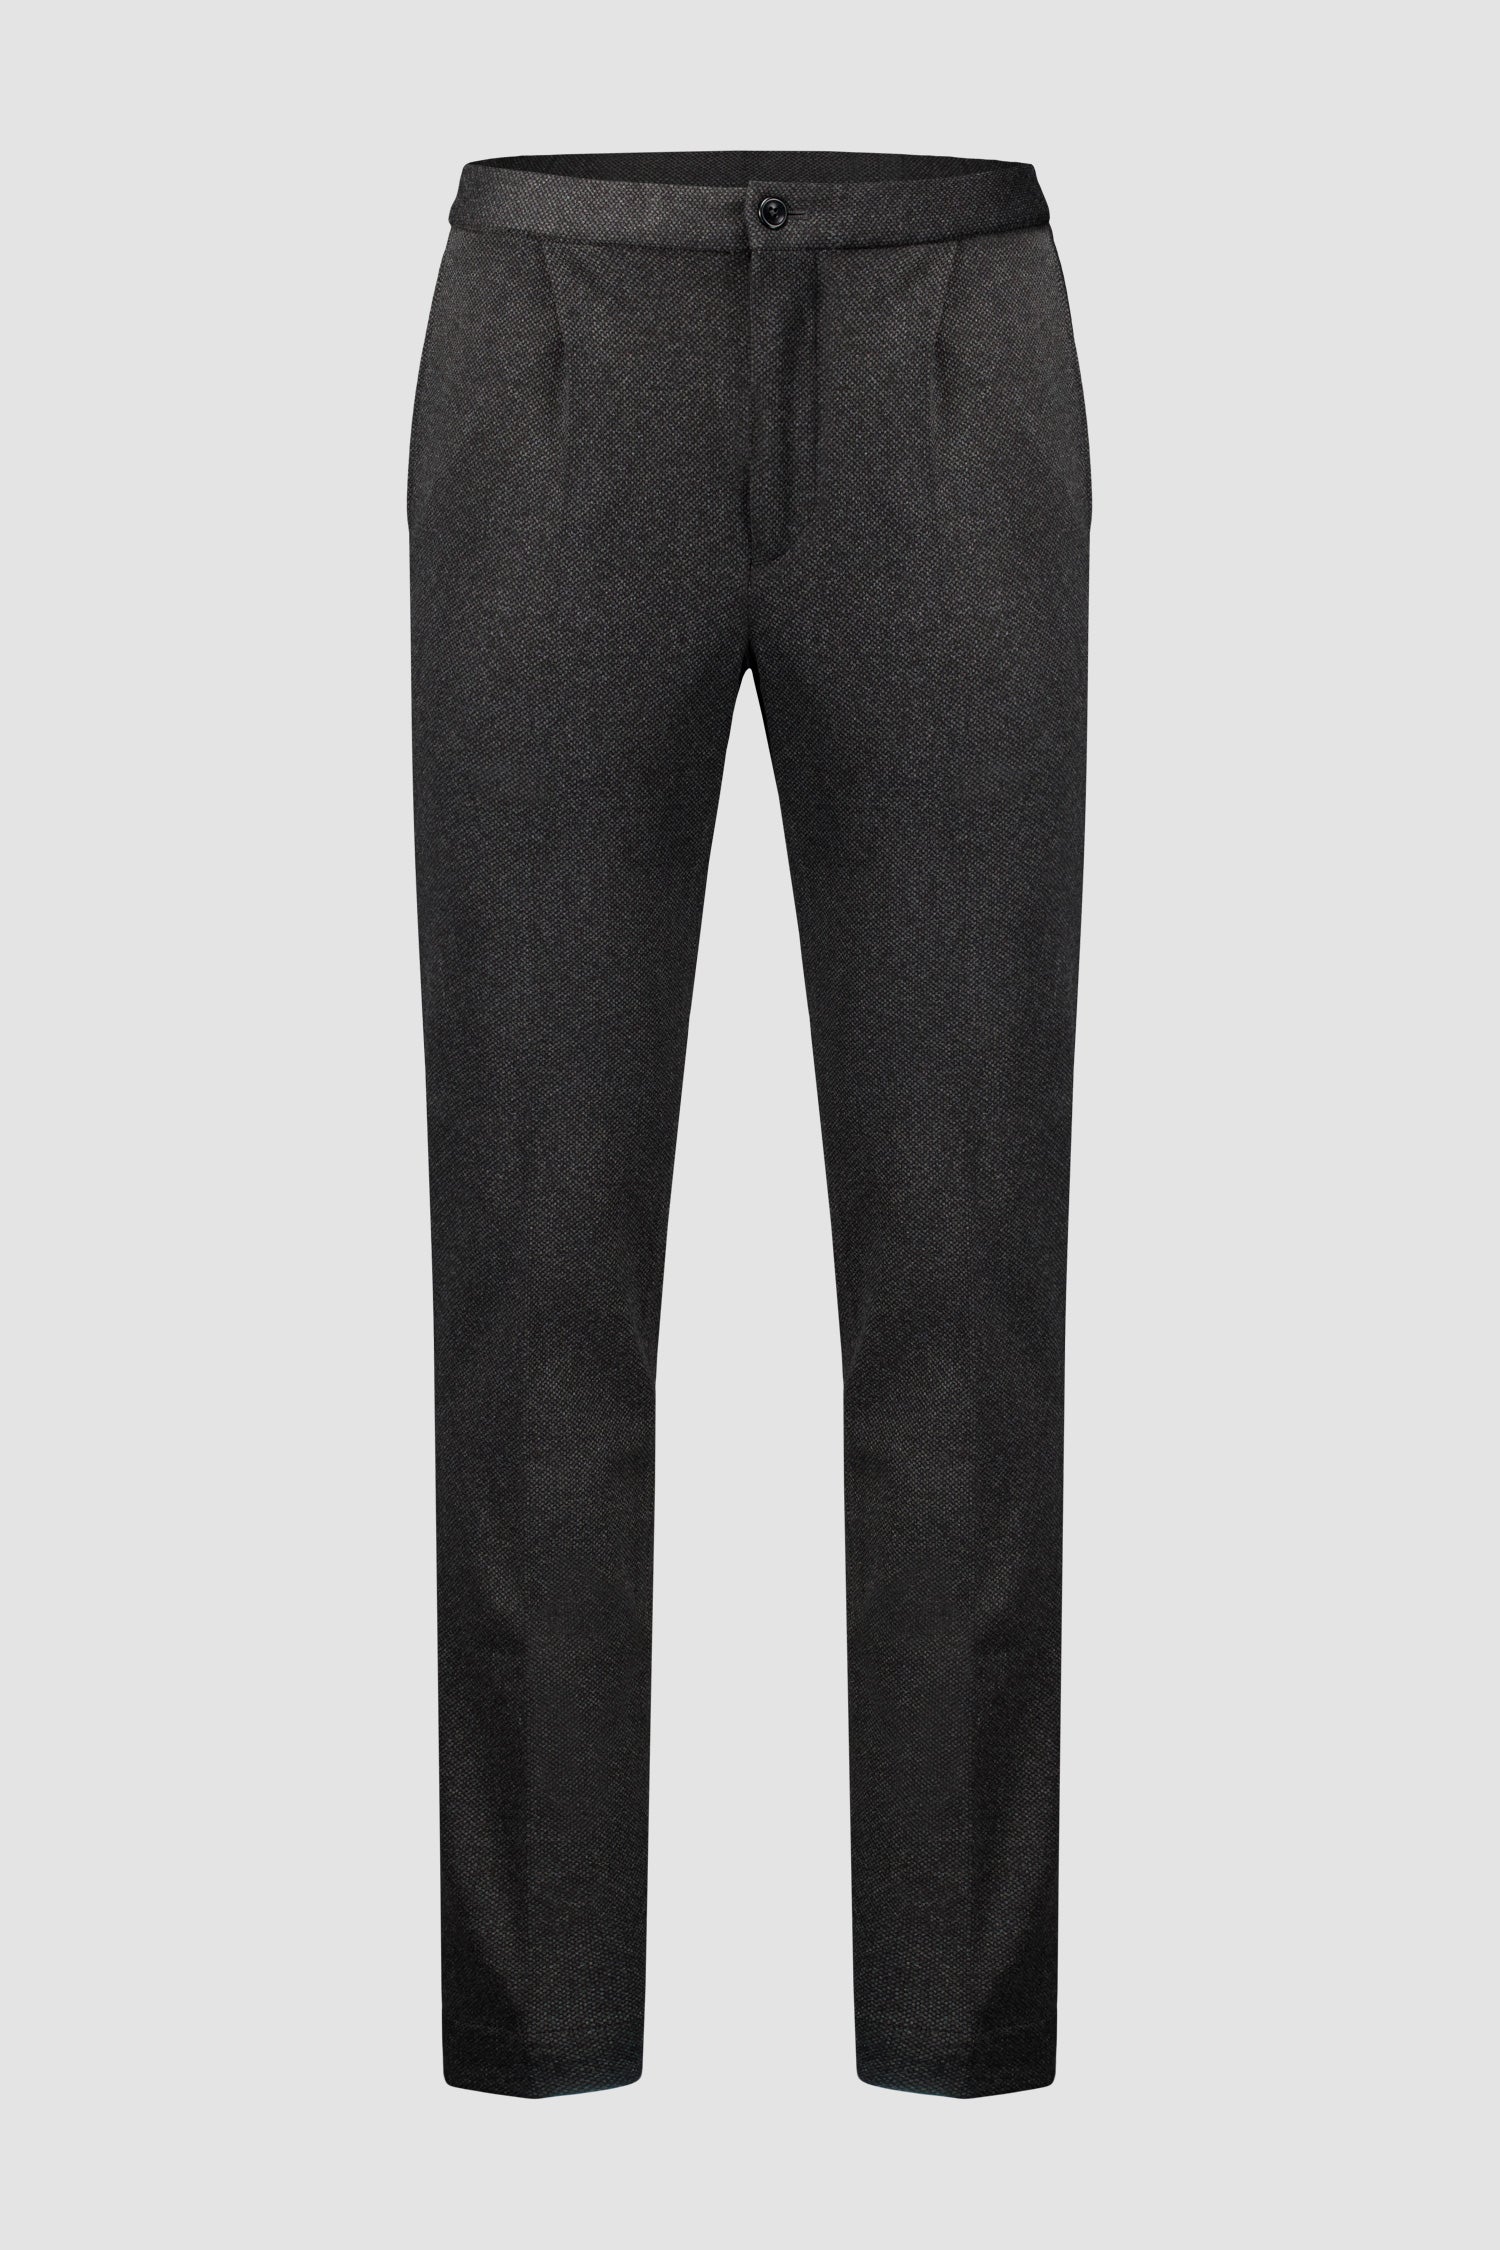 Incotex Dark Grey Knitted Trousers